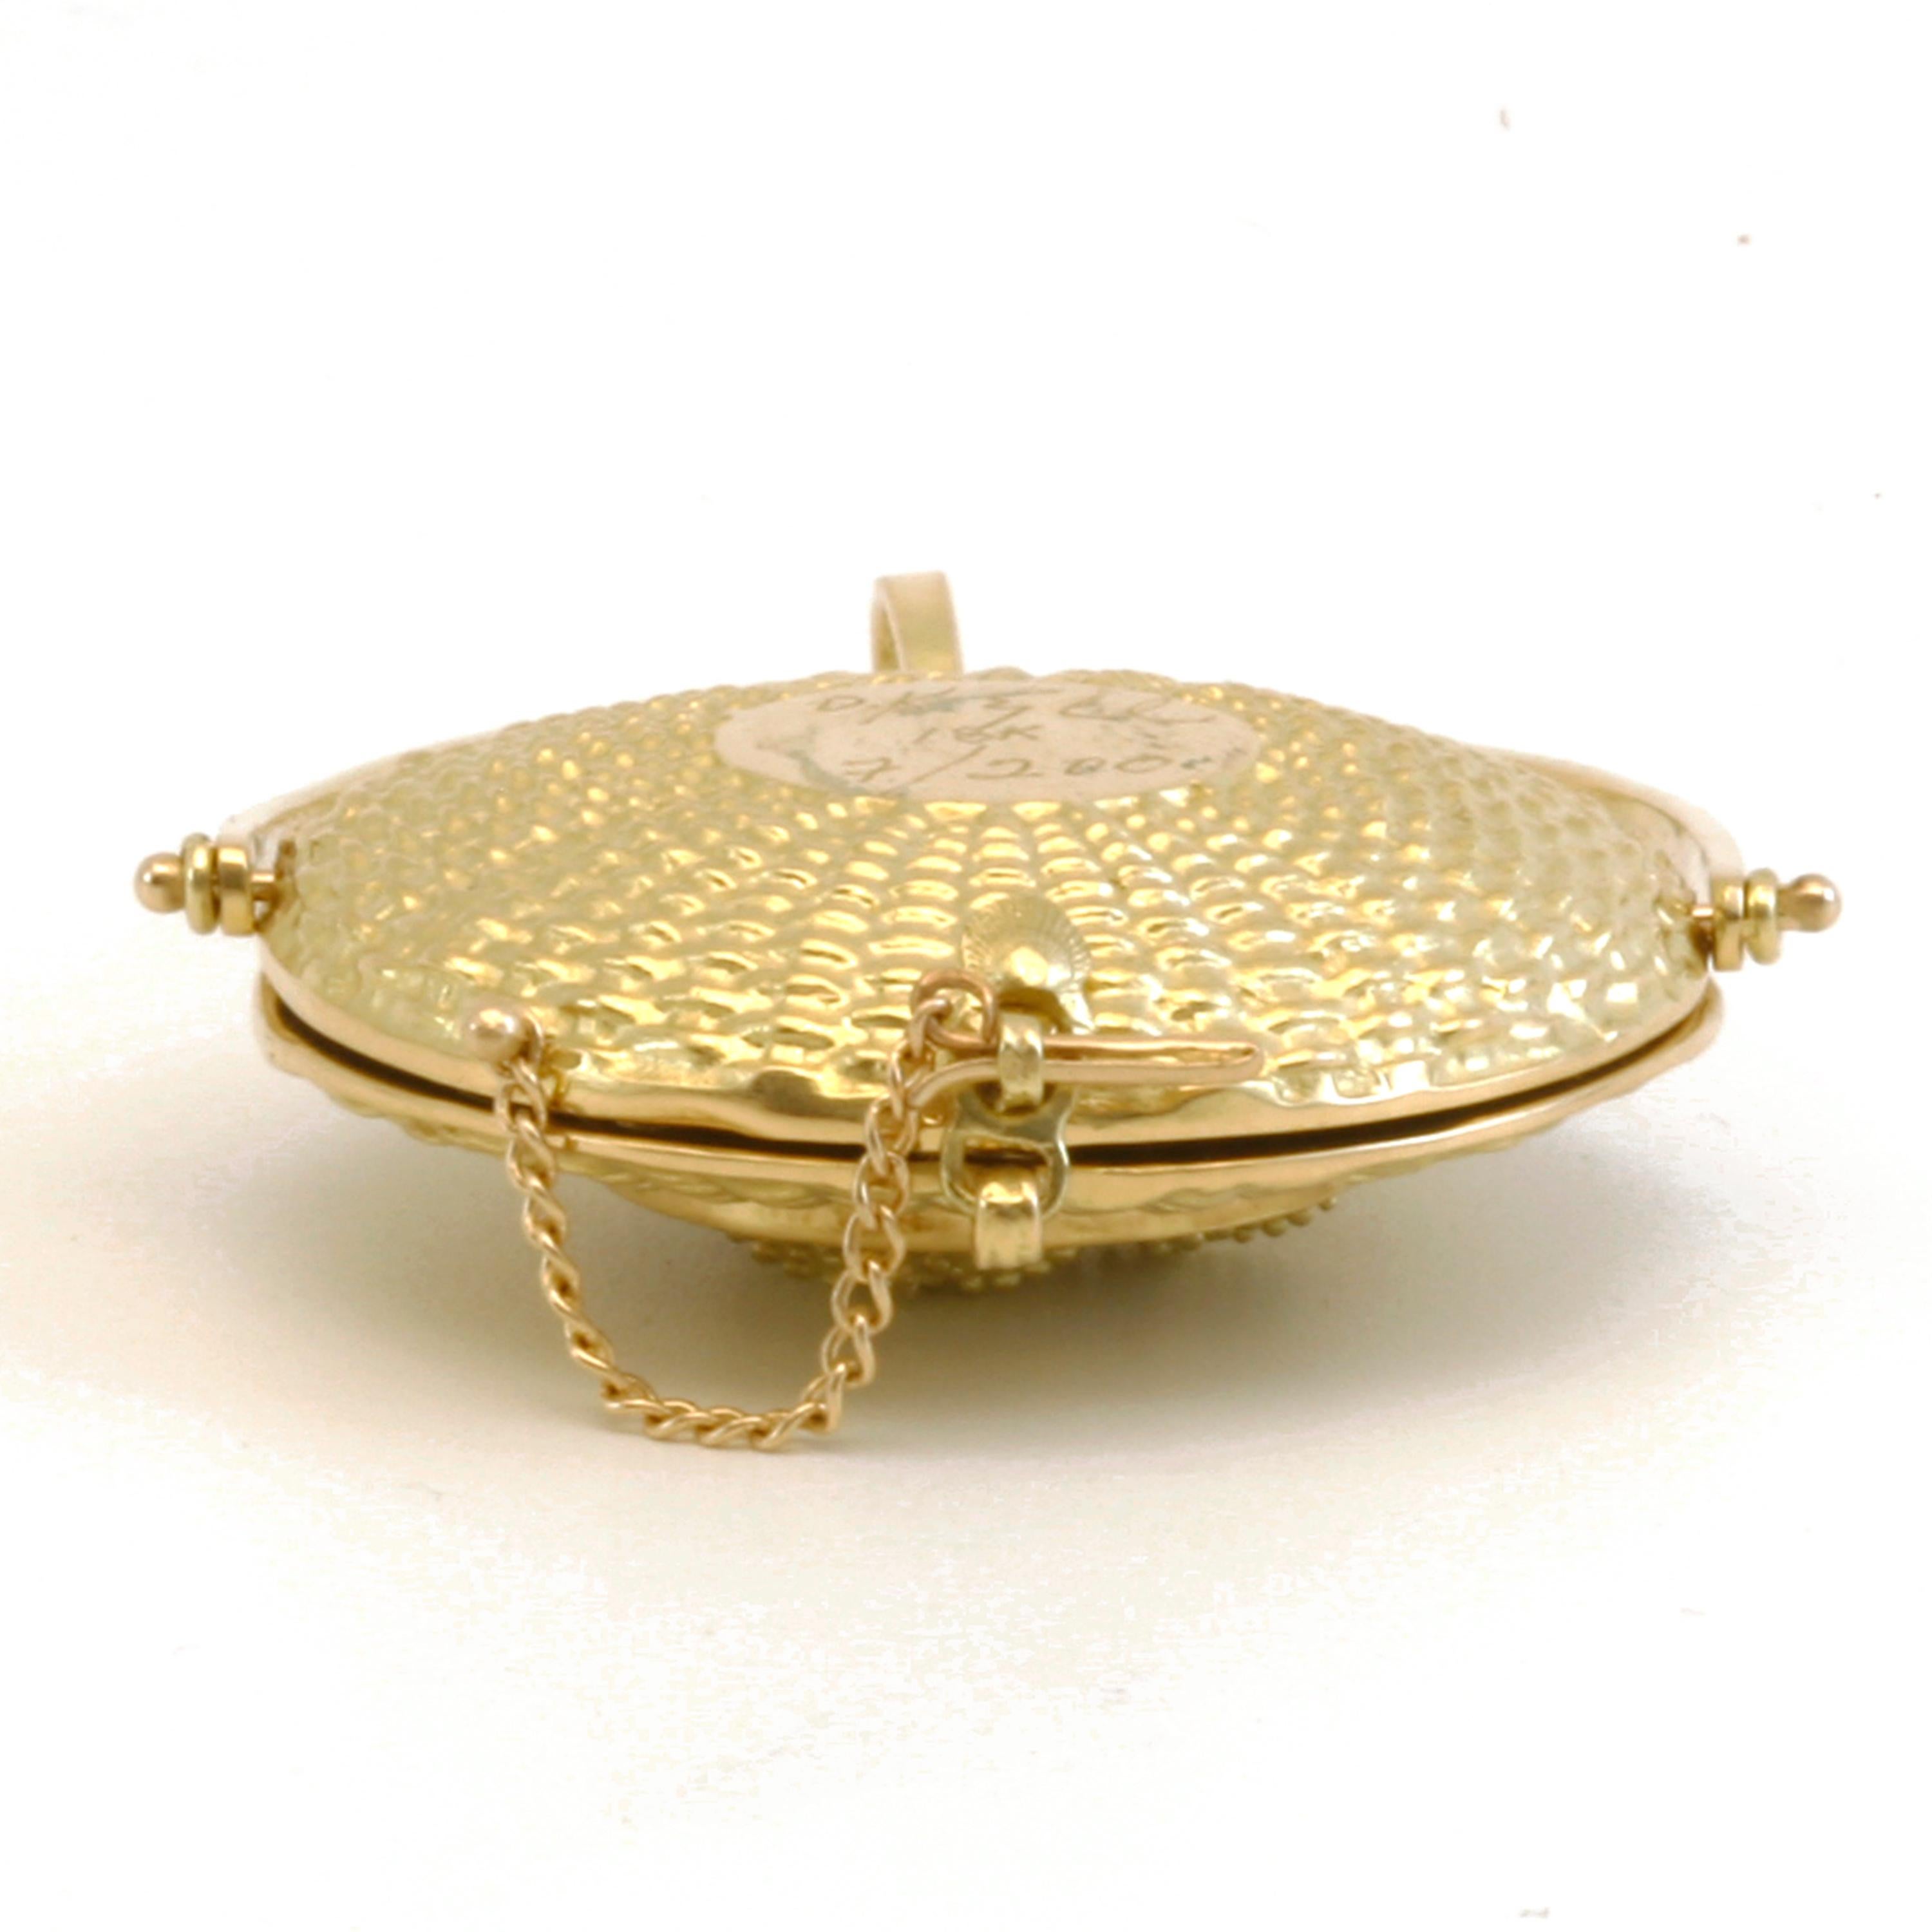  Diana Kim England 18k Nantucket Lightship Basket  Miniature Locket For Sale 2